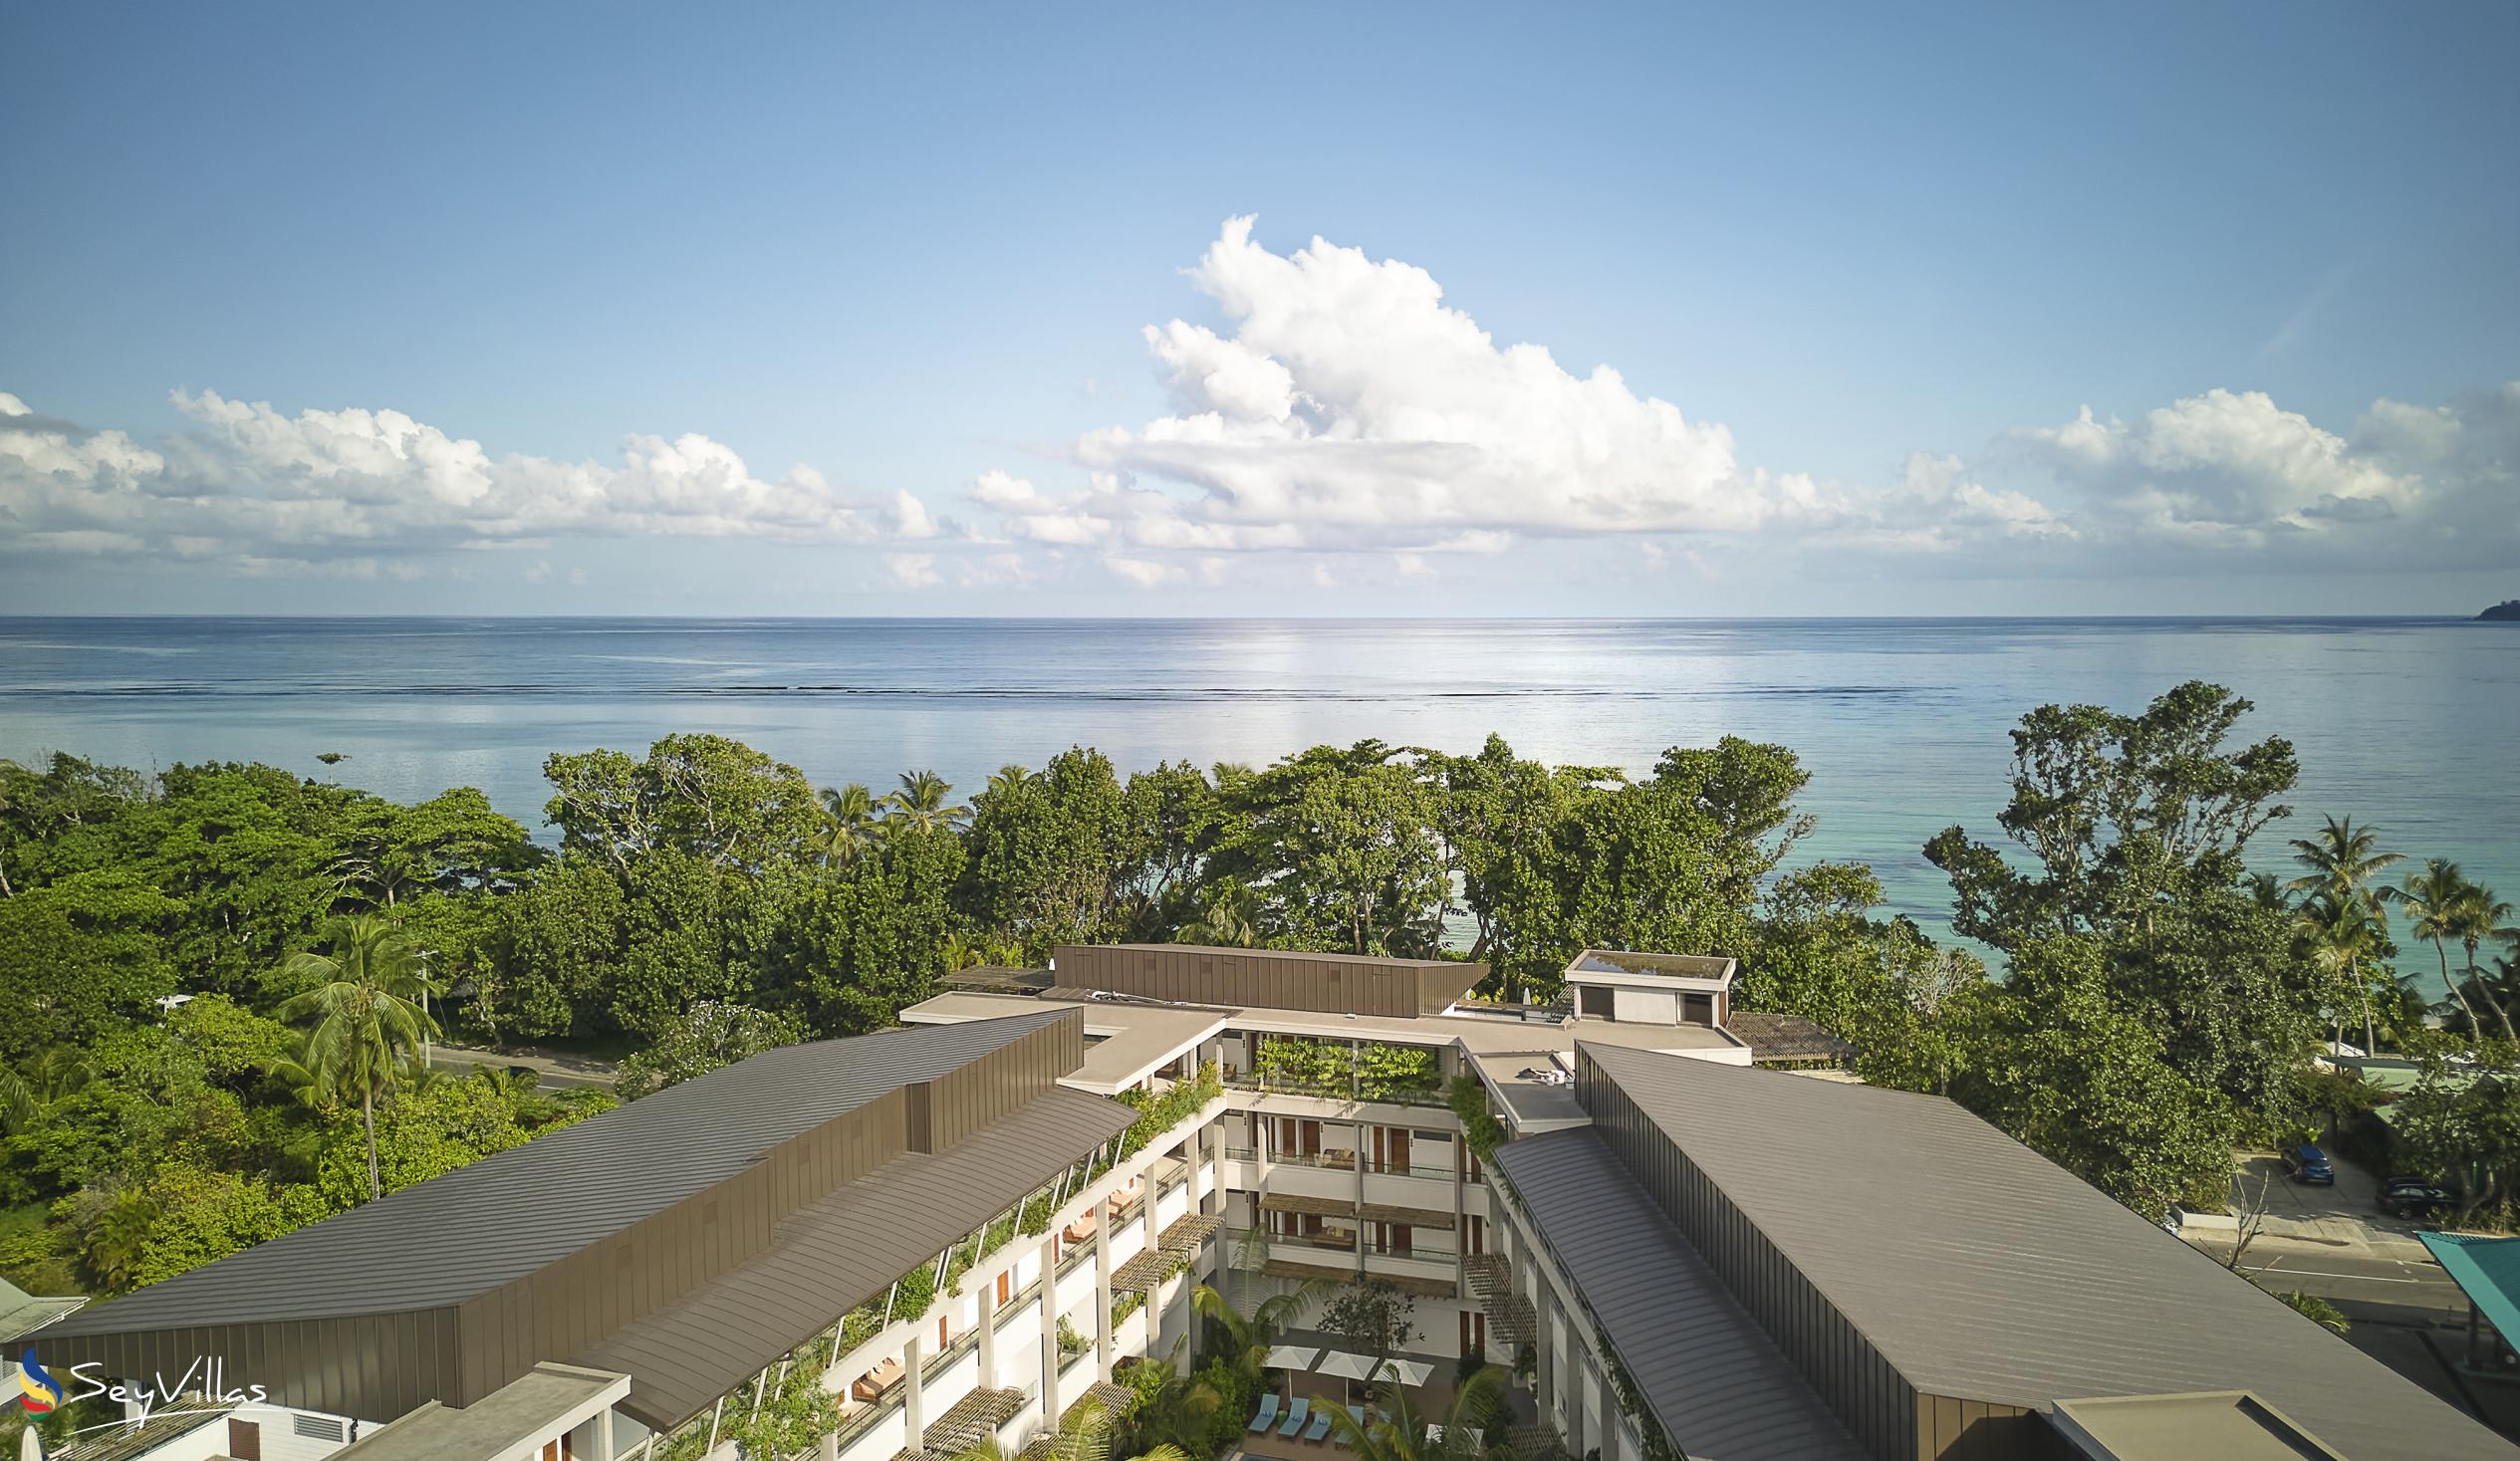 Foto 2: laila Resort - Aussenbereich - Mahé (Seychellen)